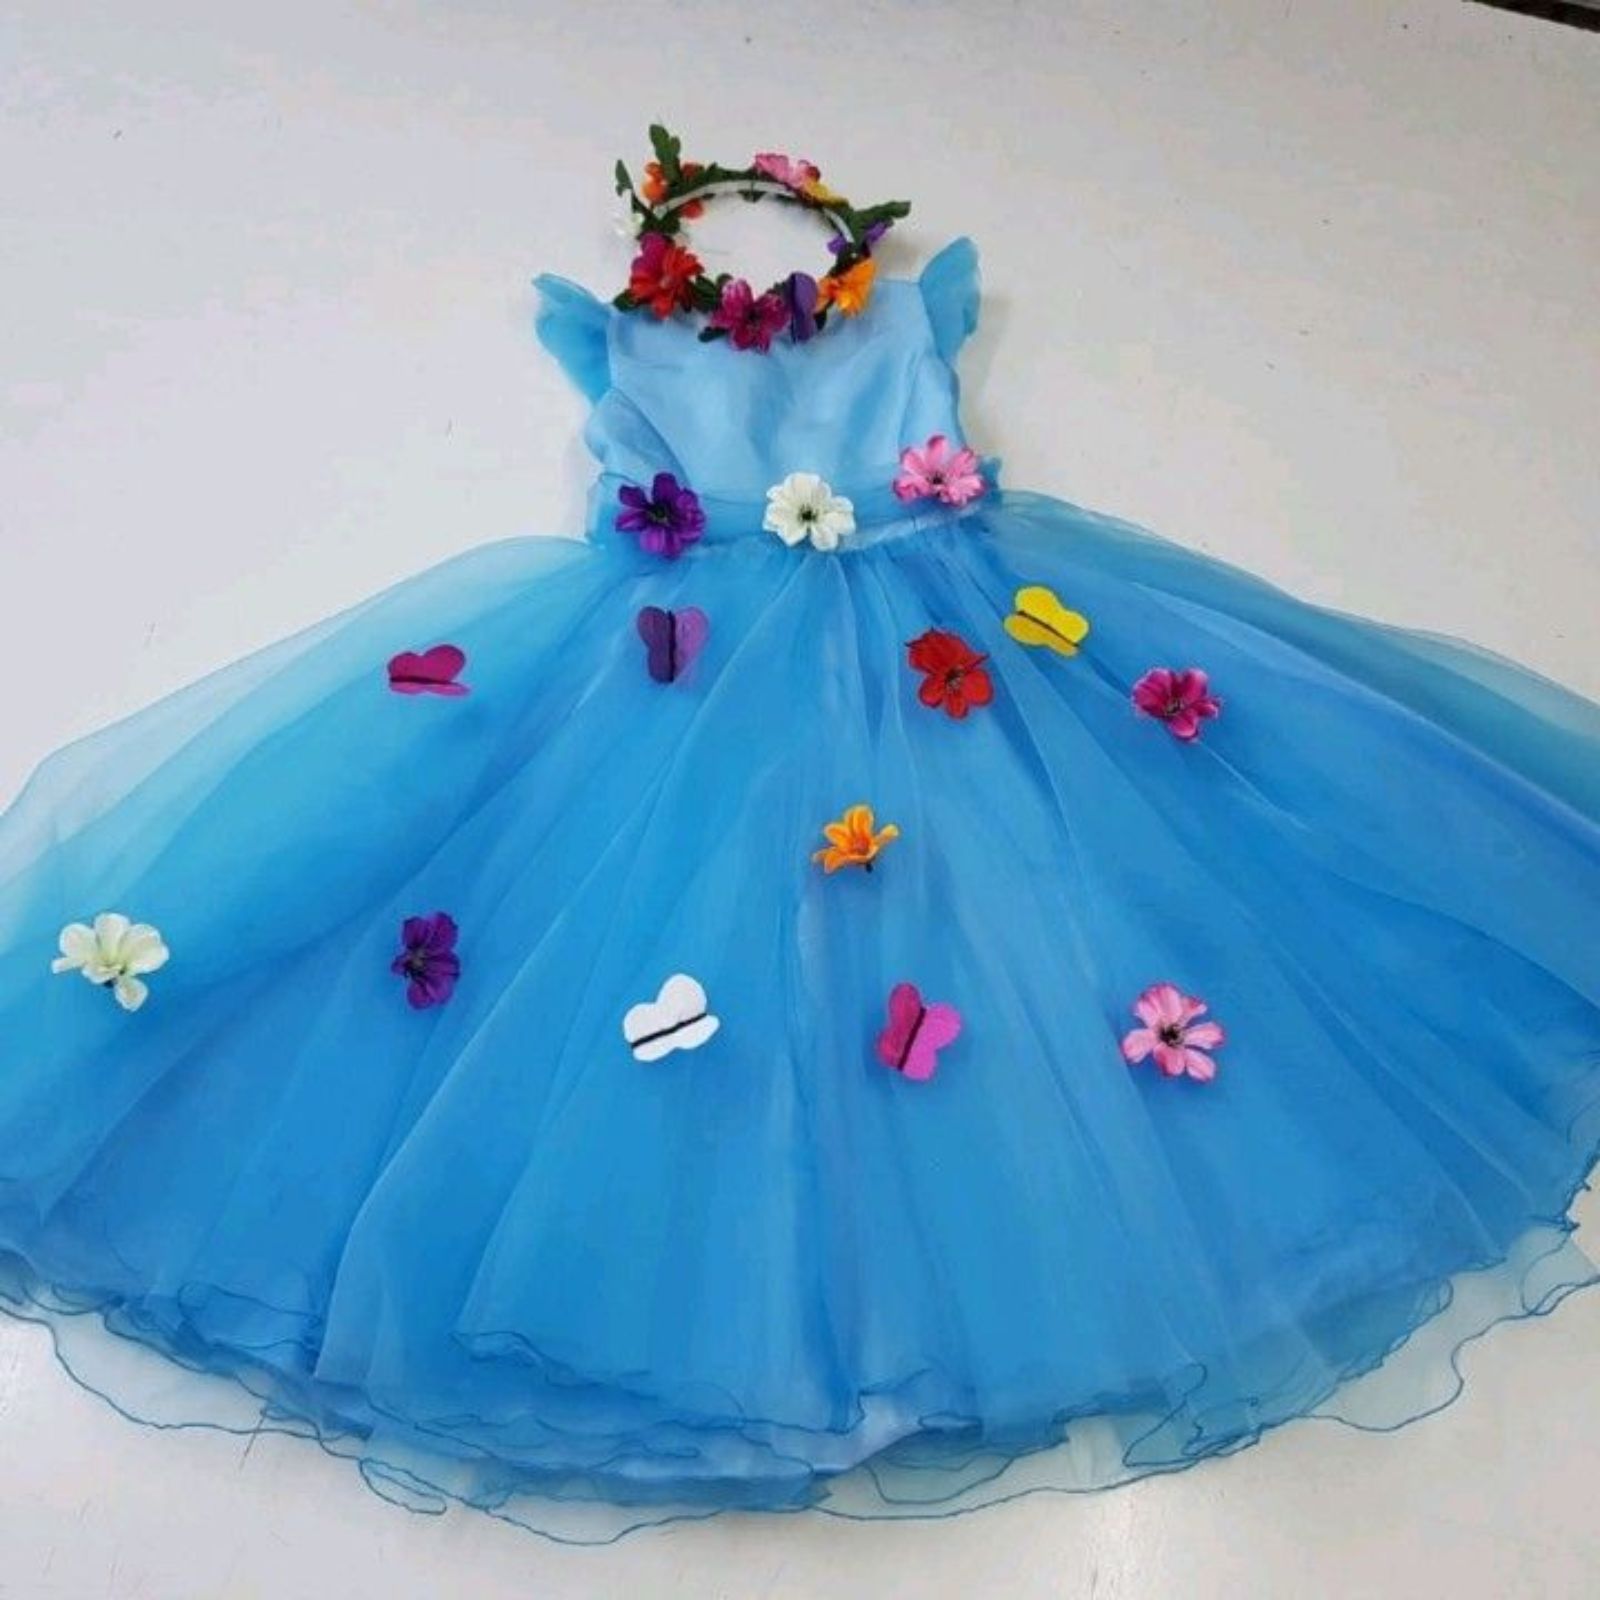 Prințesa bleu cu flori și fluturași 1